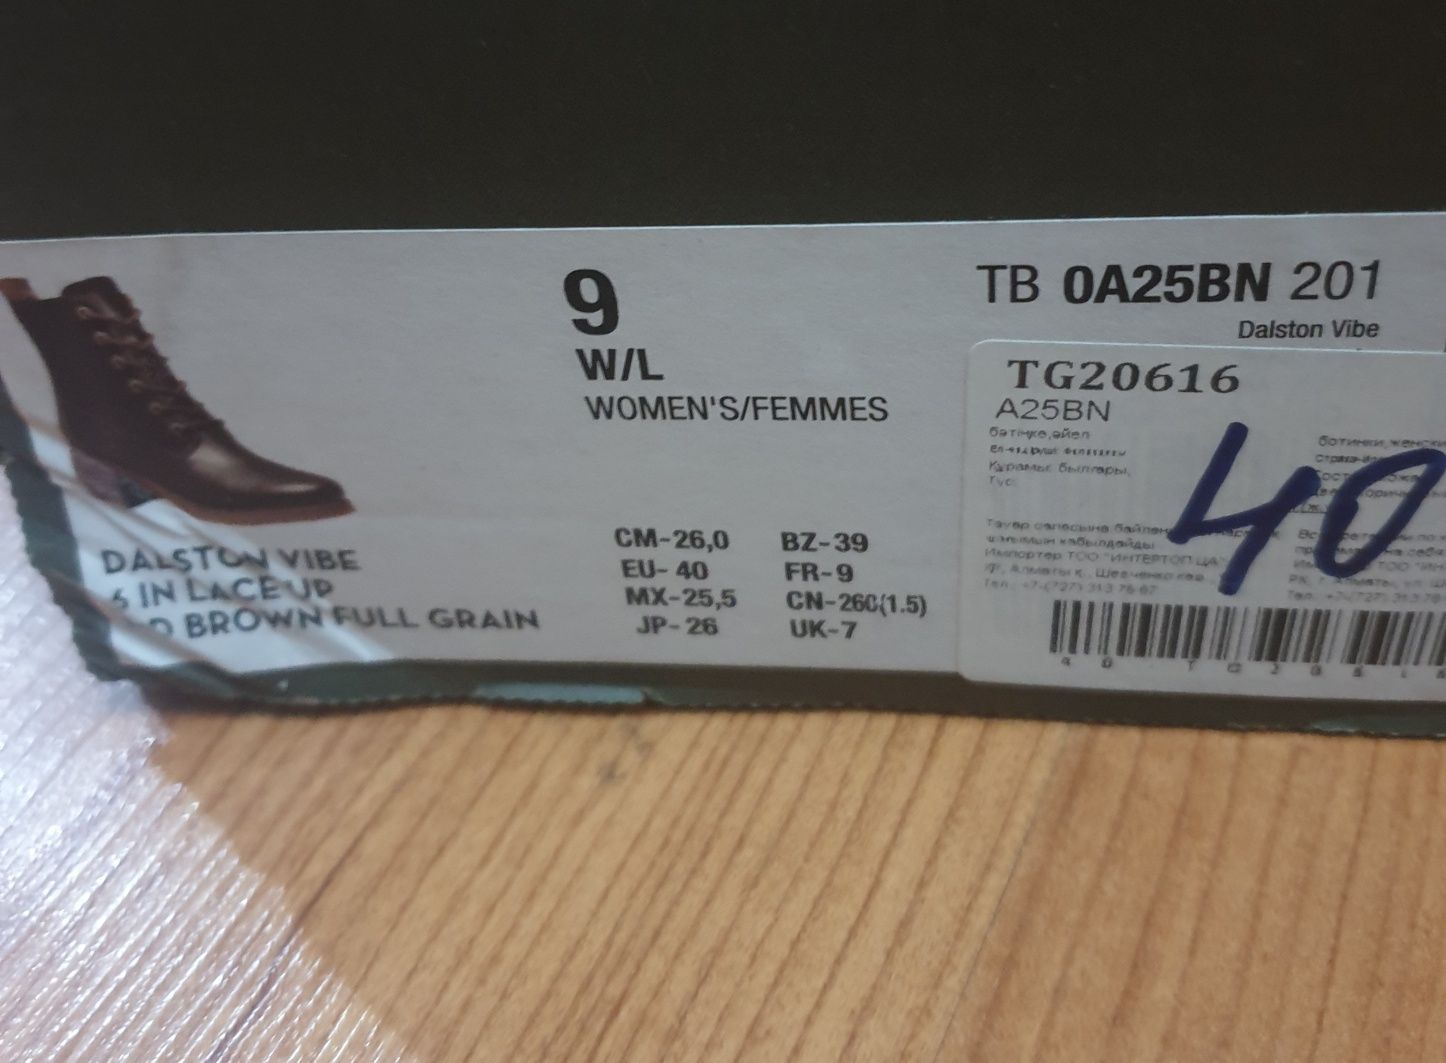 Продам Тимберленды оригинал кожаные ботинки женские Тимберленд демисез